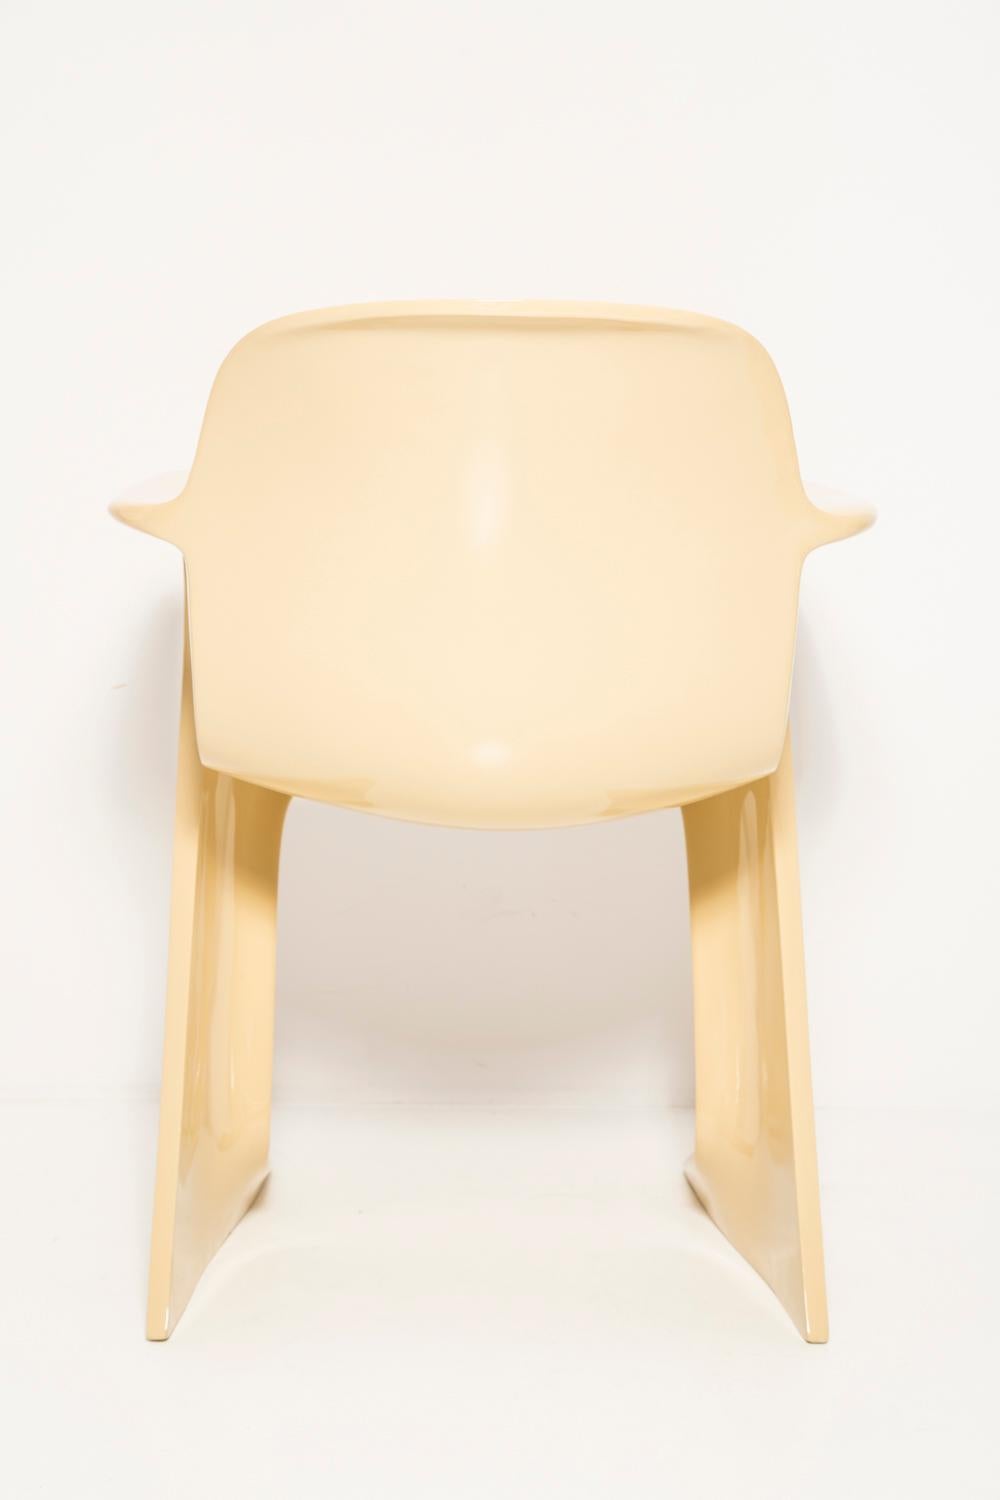 Fiberglass Midcentury Beige Kangaroo Chair Designed by Ernst Moeckl, Germany, 1968 For Sale